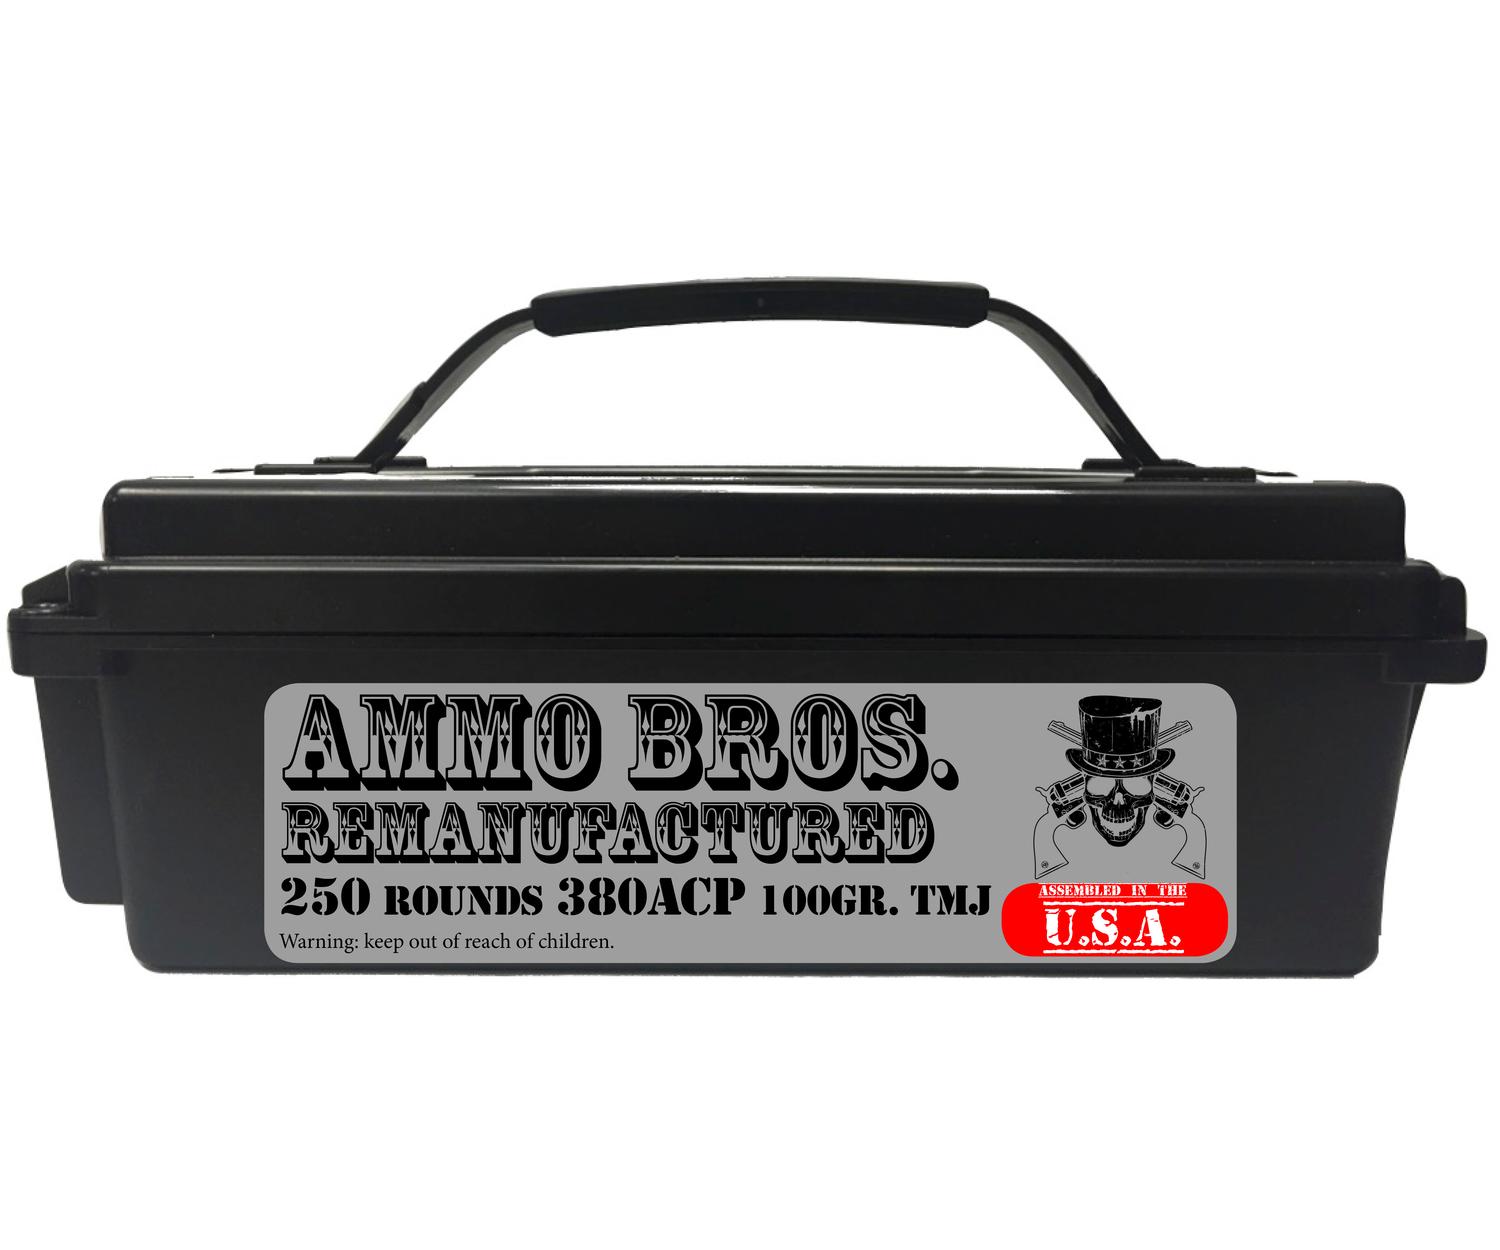  Ammo Bros Reloads 380 Acp 100gr 250rds